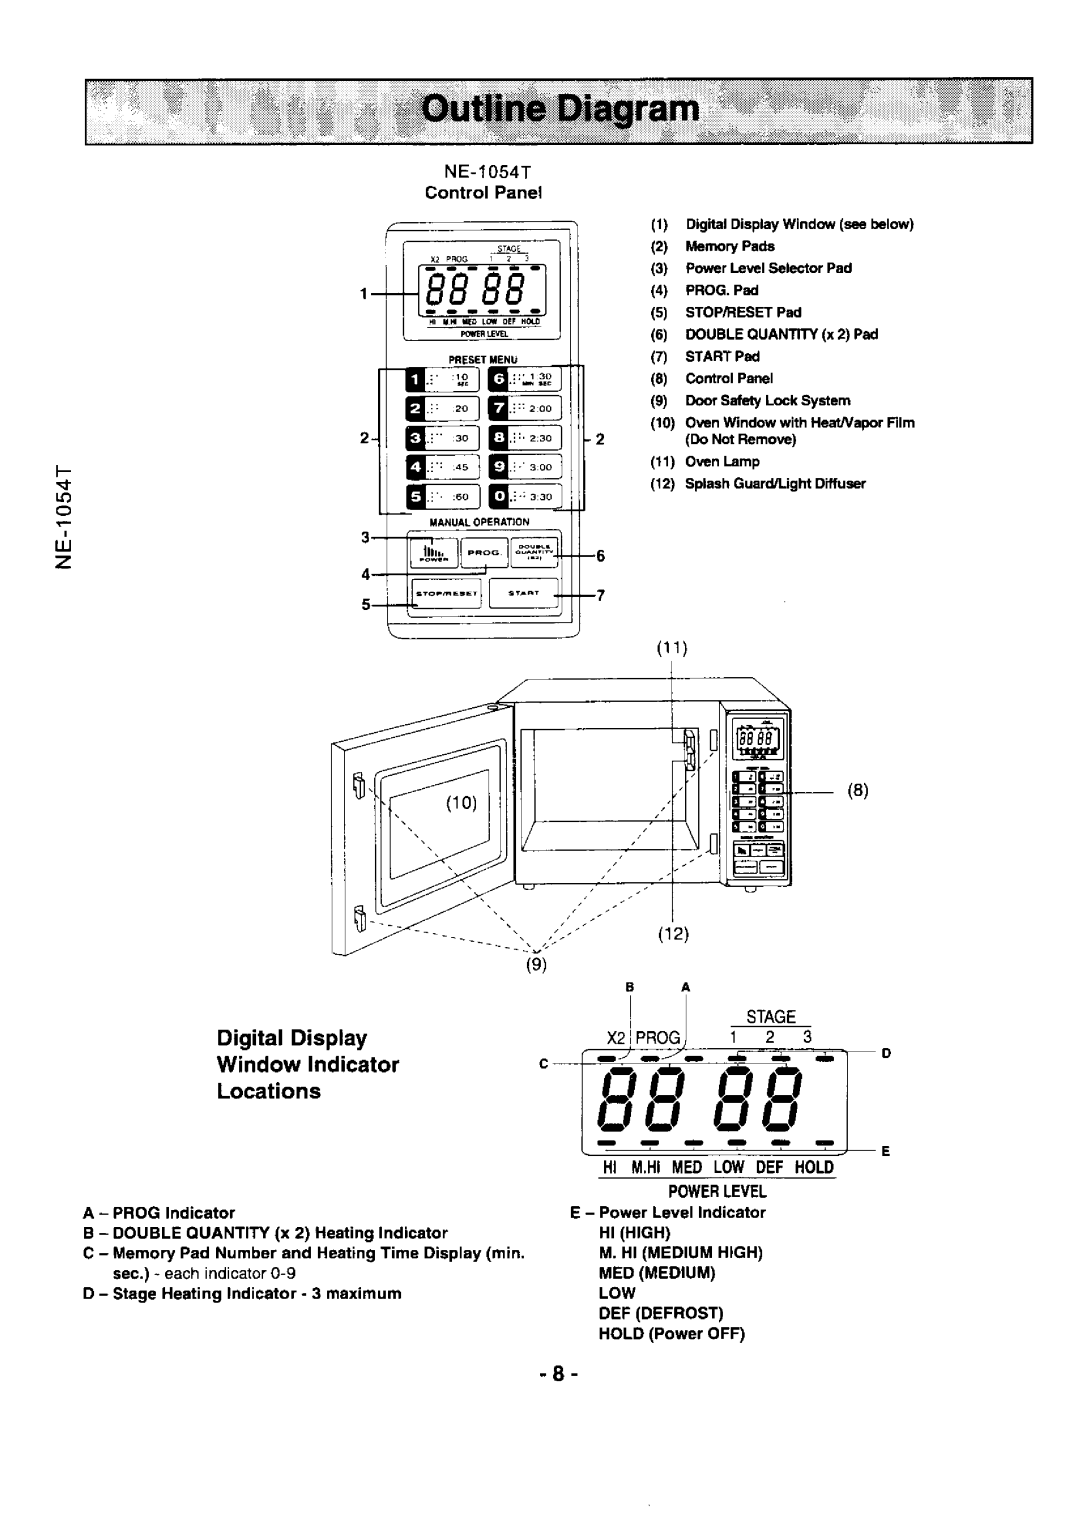 Panasonic NE-l0547, NE-l0247 manual DigitalDisplay WindowIndicator Locations 